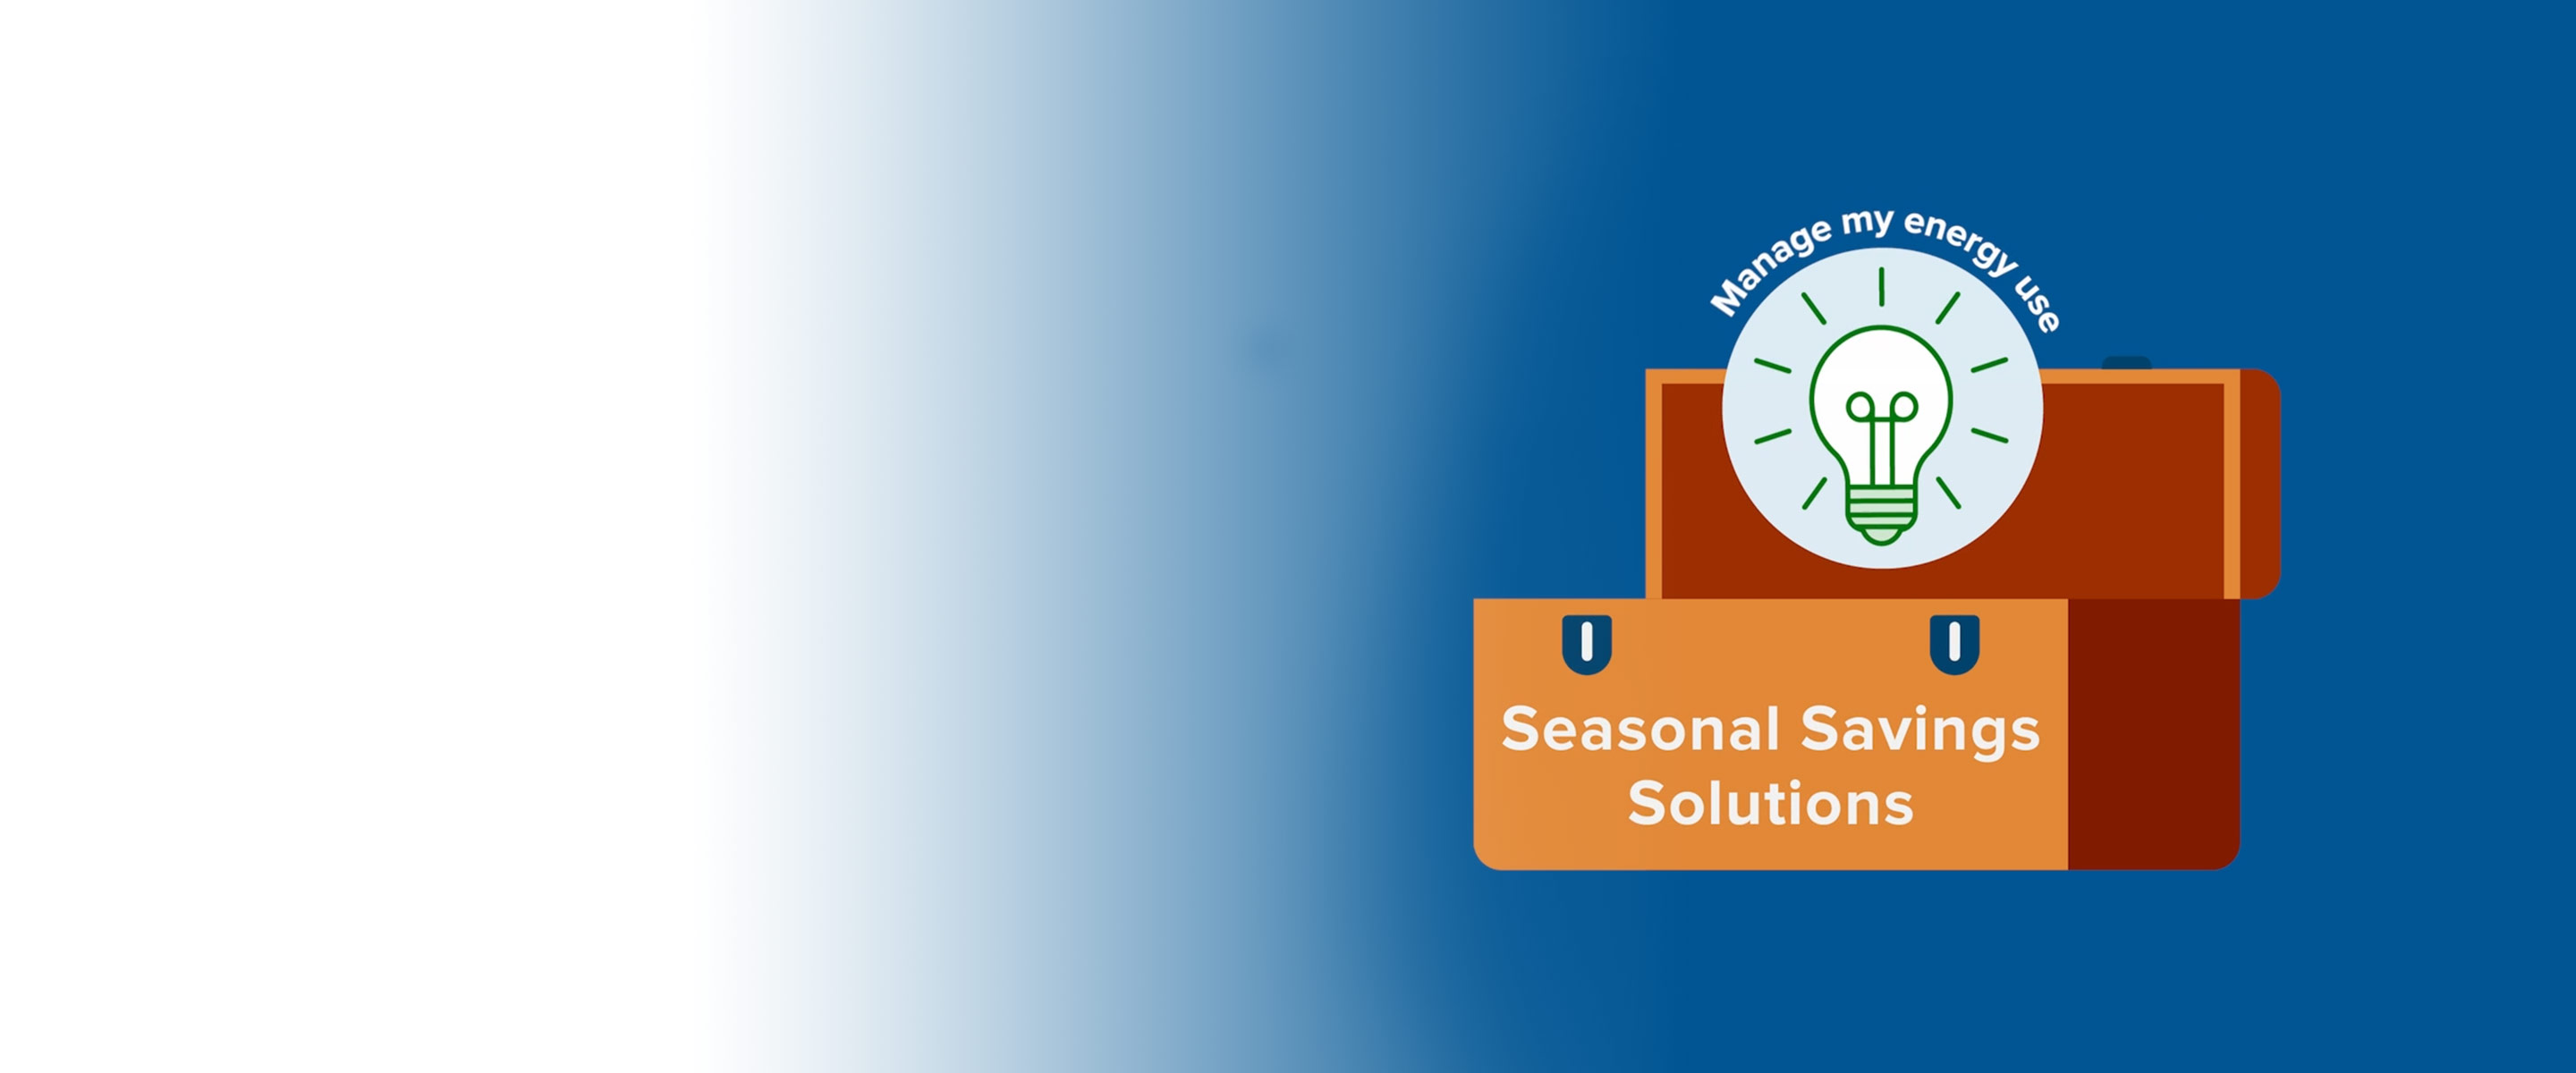 seasonal savings solutions